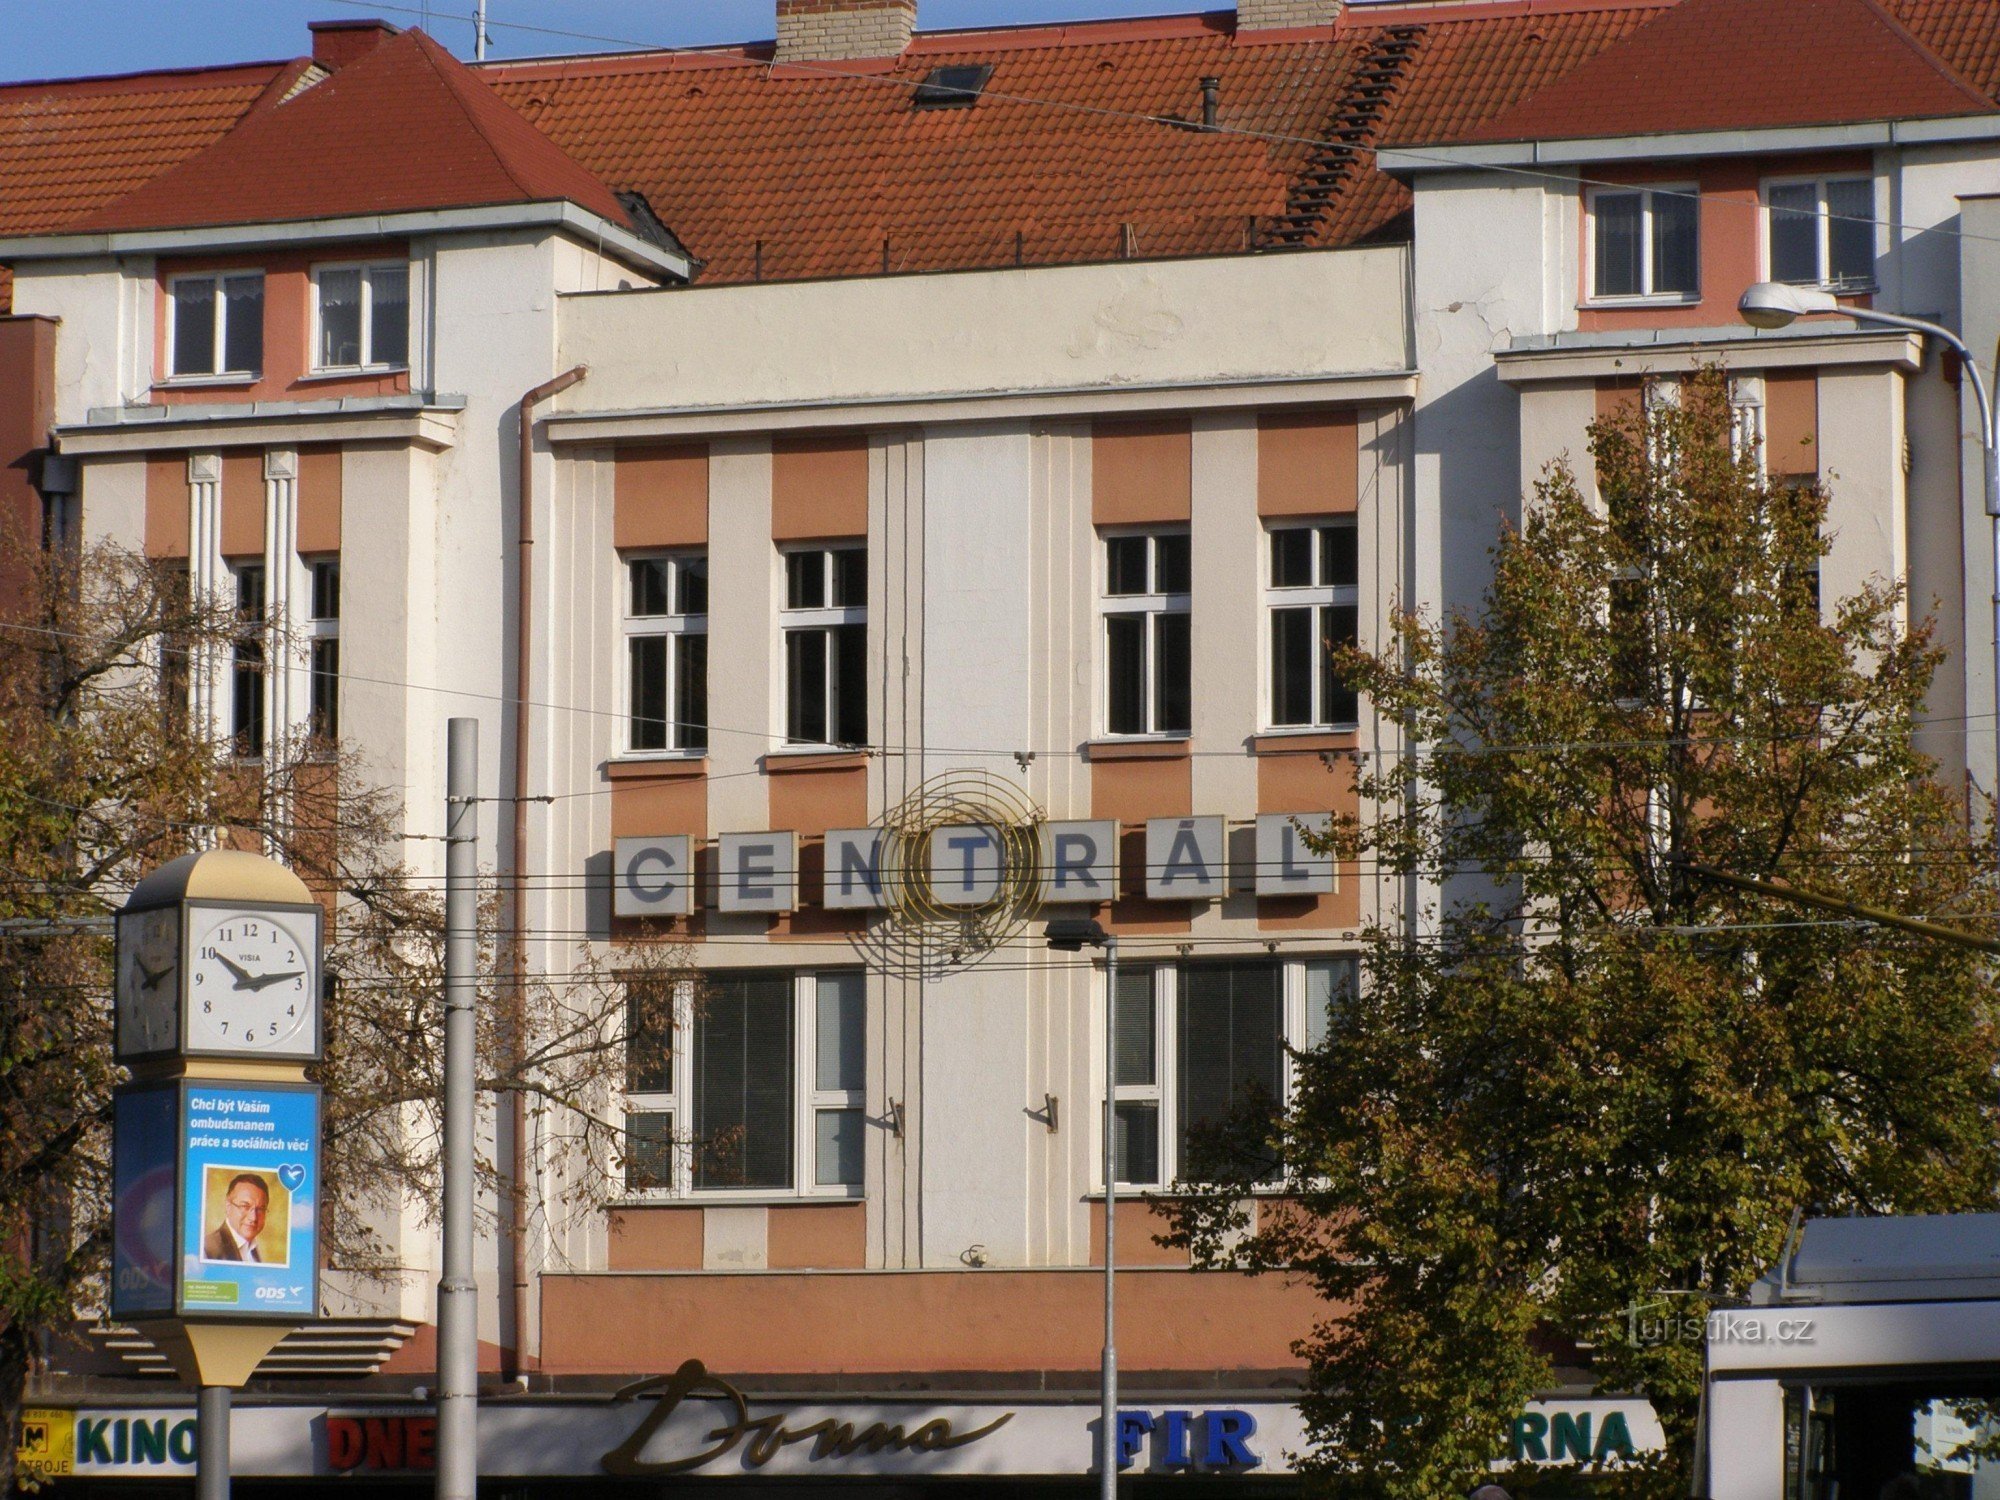 Hradec Králové - biograf Centrál